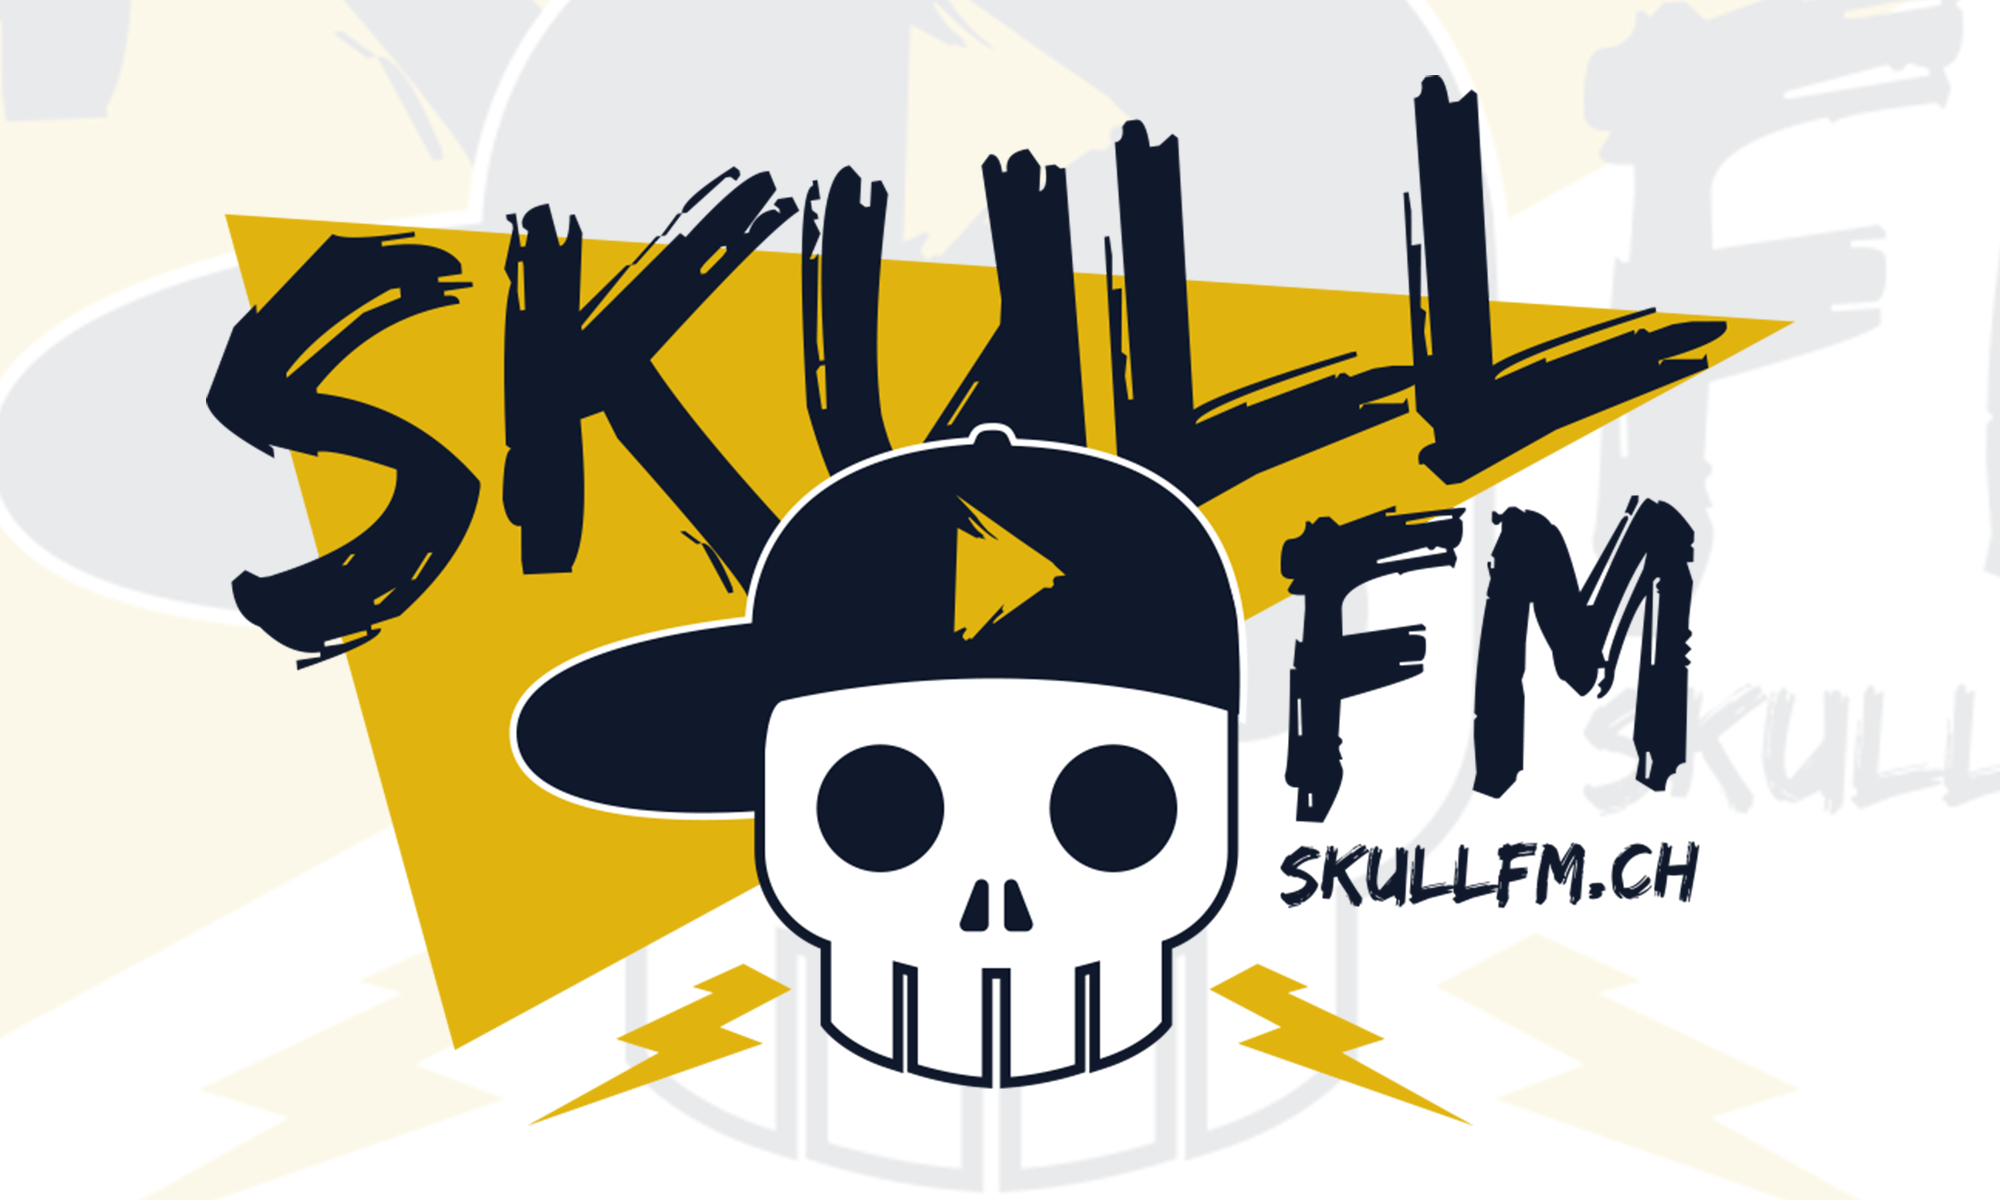 SKULL FM